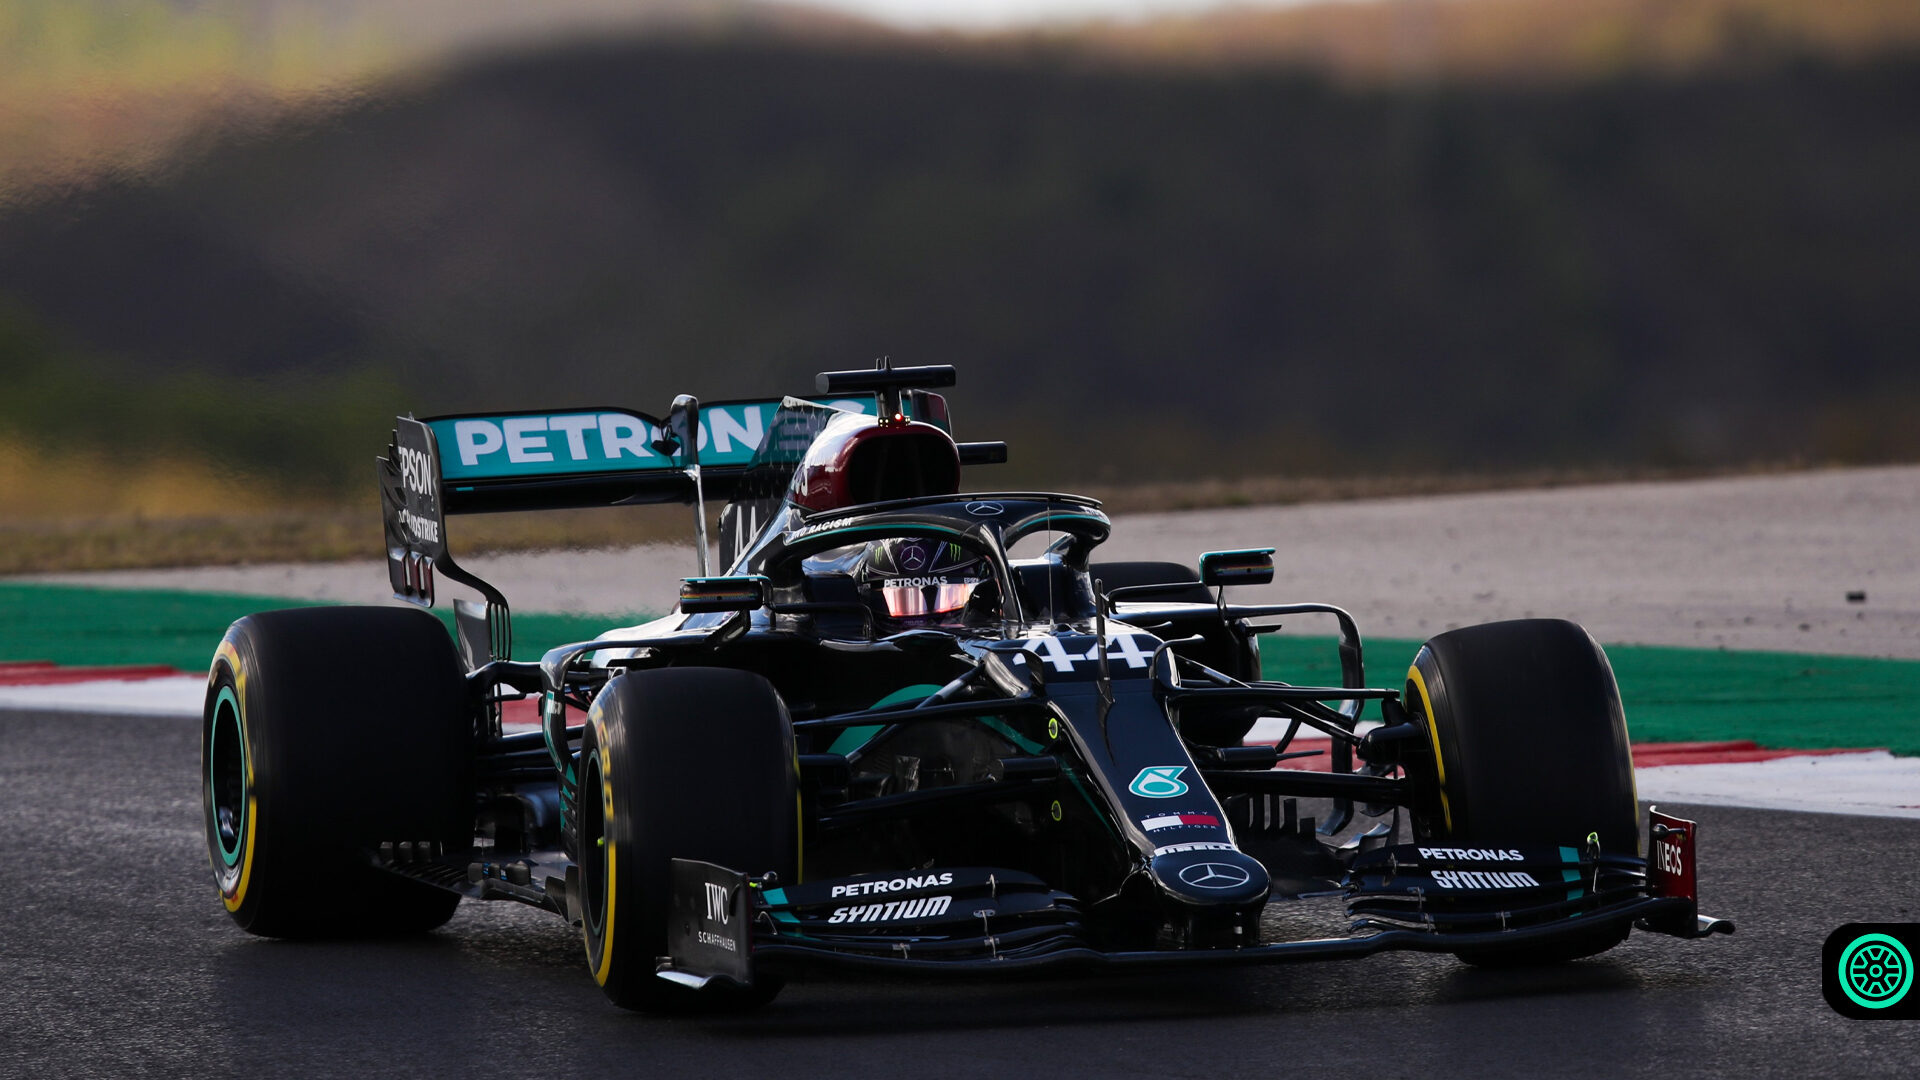 Lewis Hamilton 100 pol pozisyonu sahip ilk F1 pilotu oldu 2